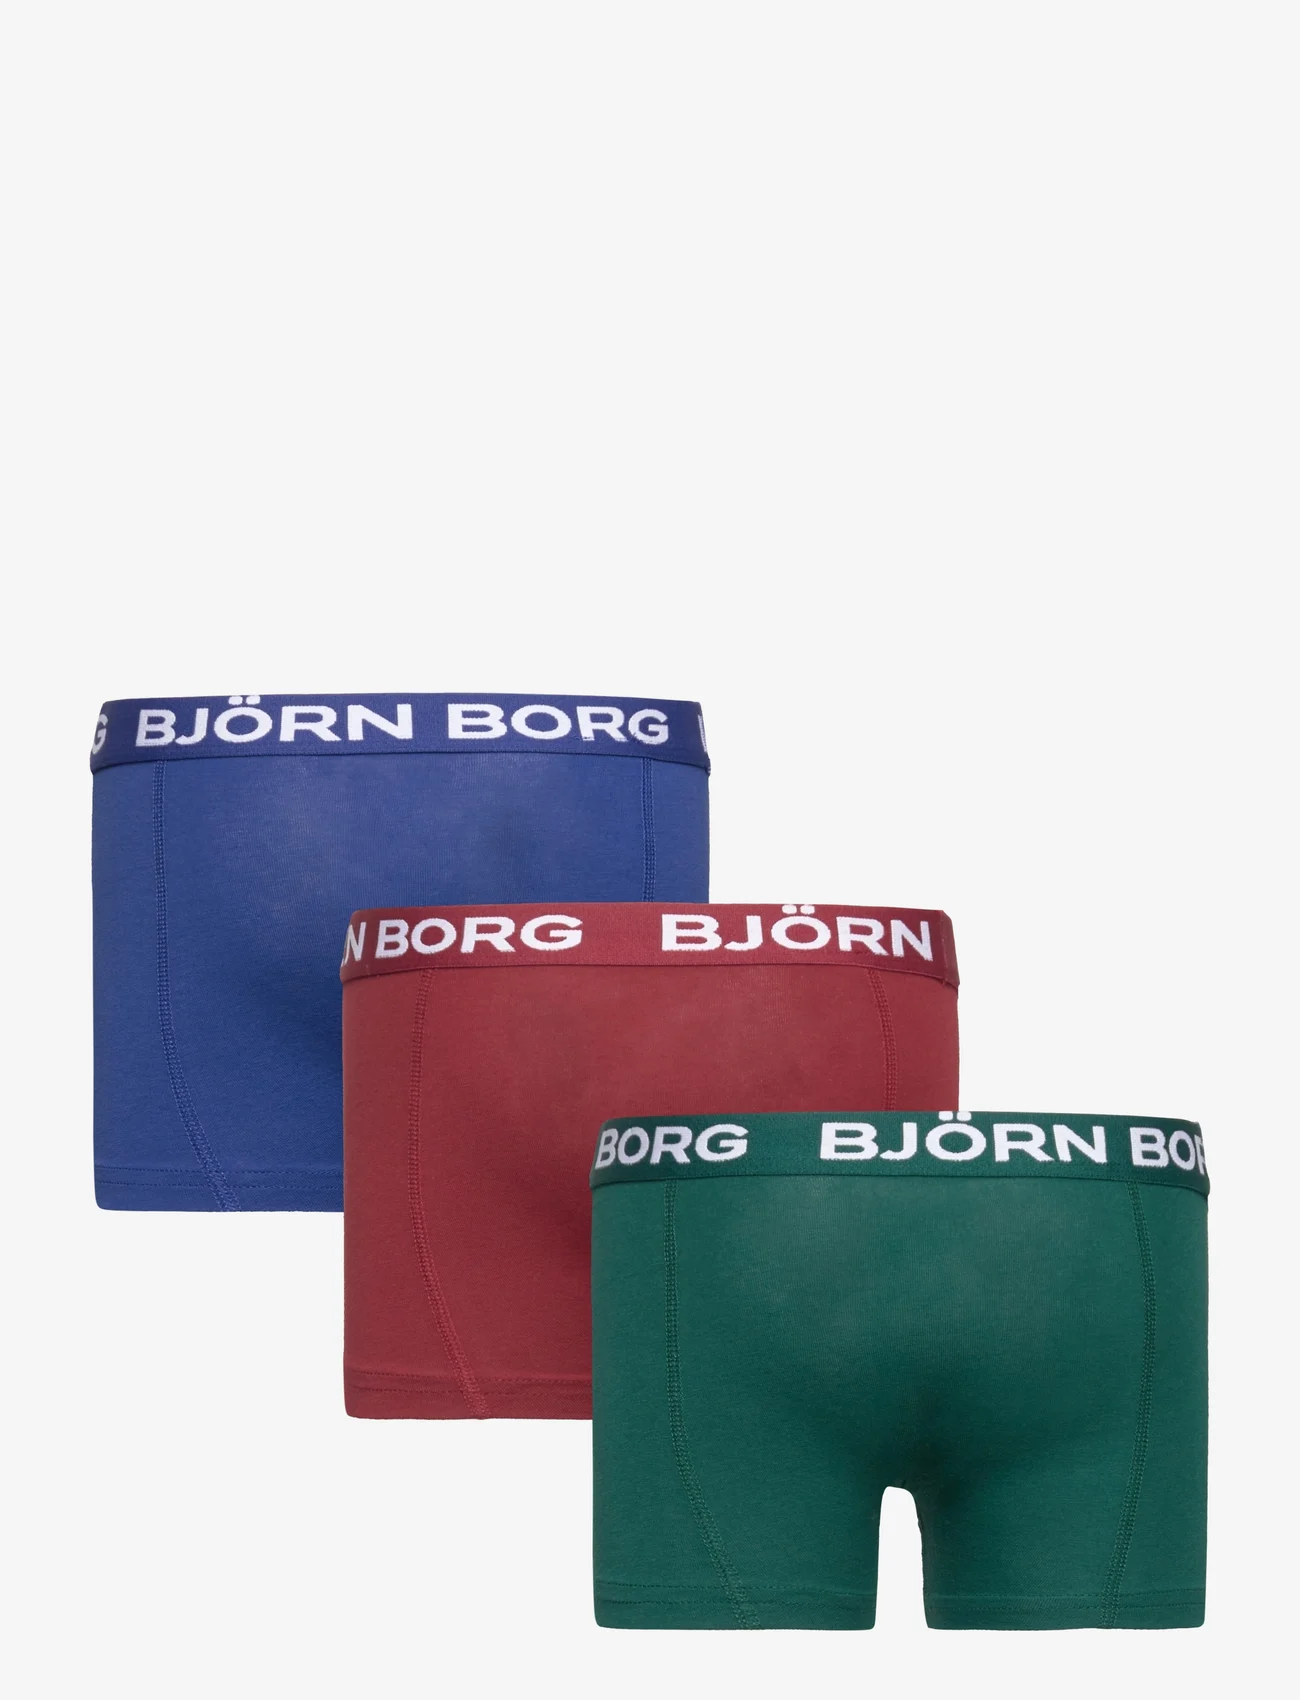 Björn Borg - CORE BOXER 3p - underpants - multipack 1 - 1